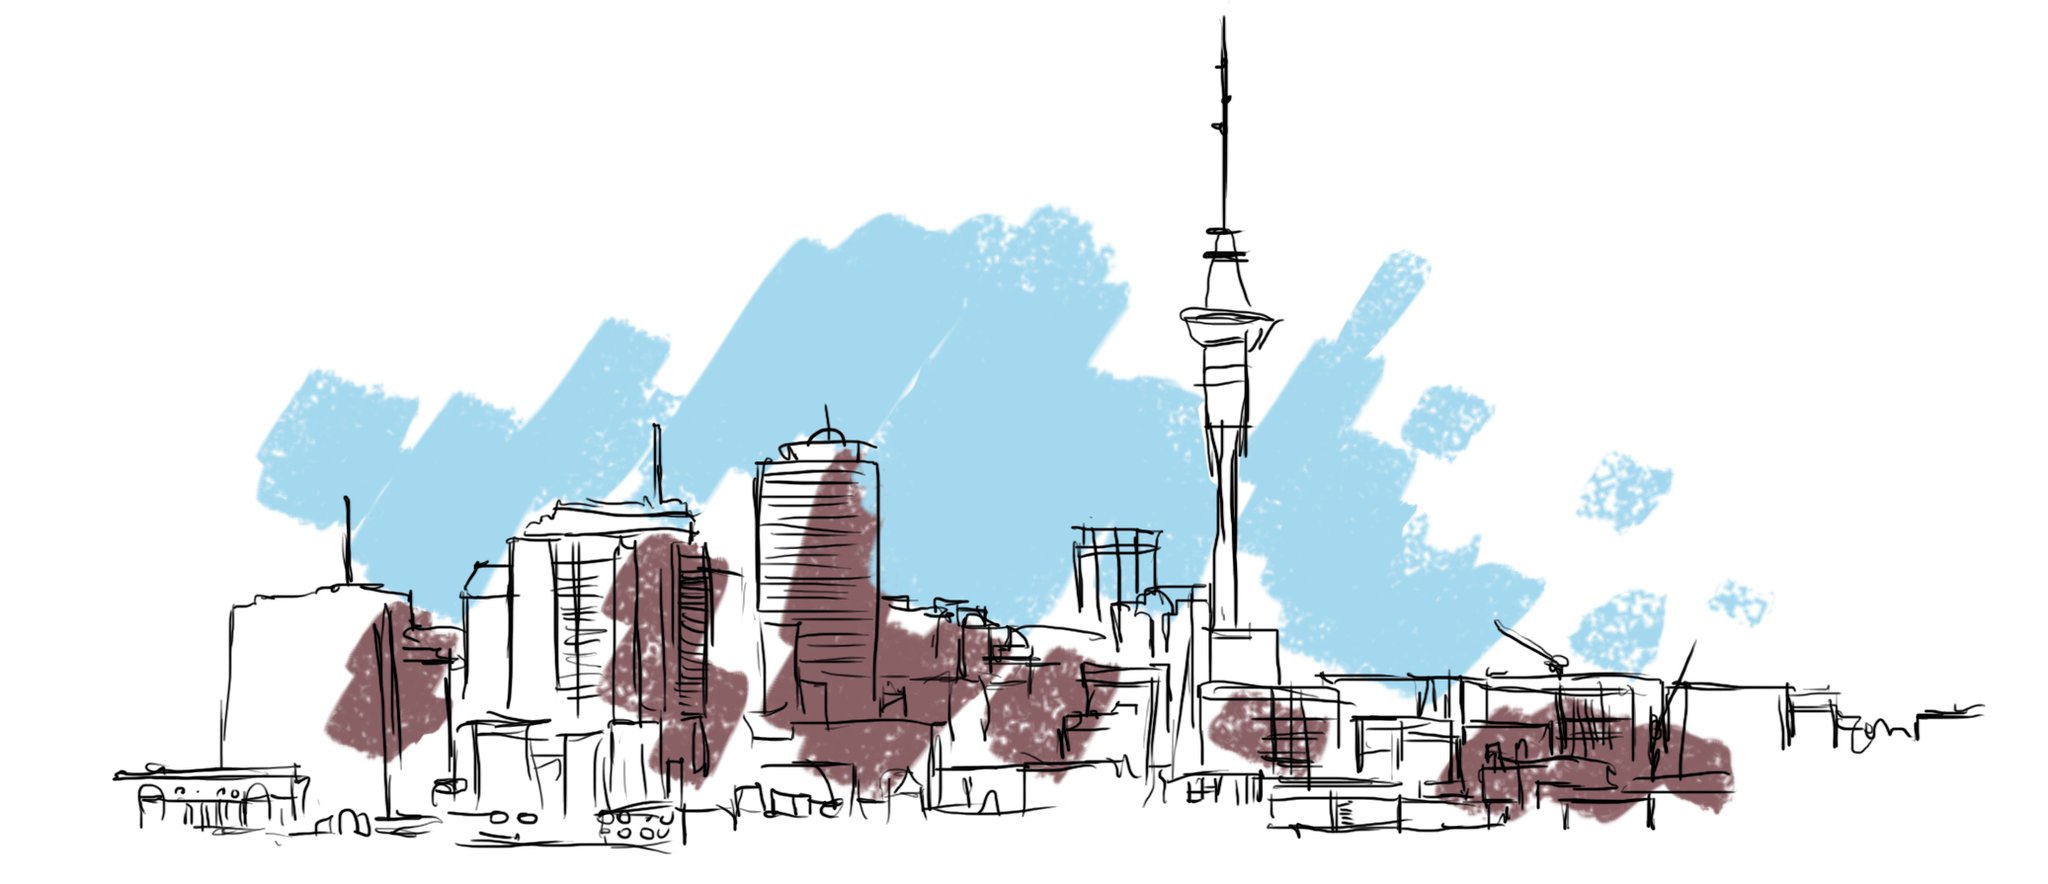 auckland-city-cityscape-drawing-sketch-izak